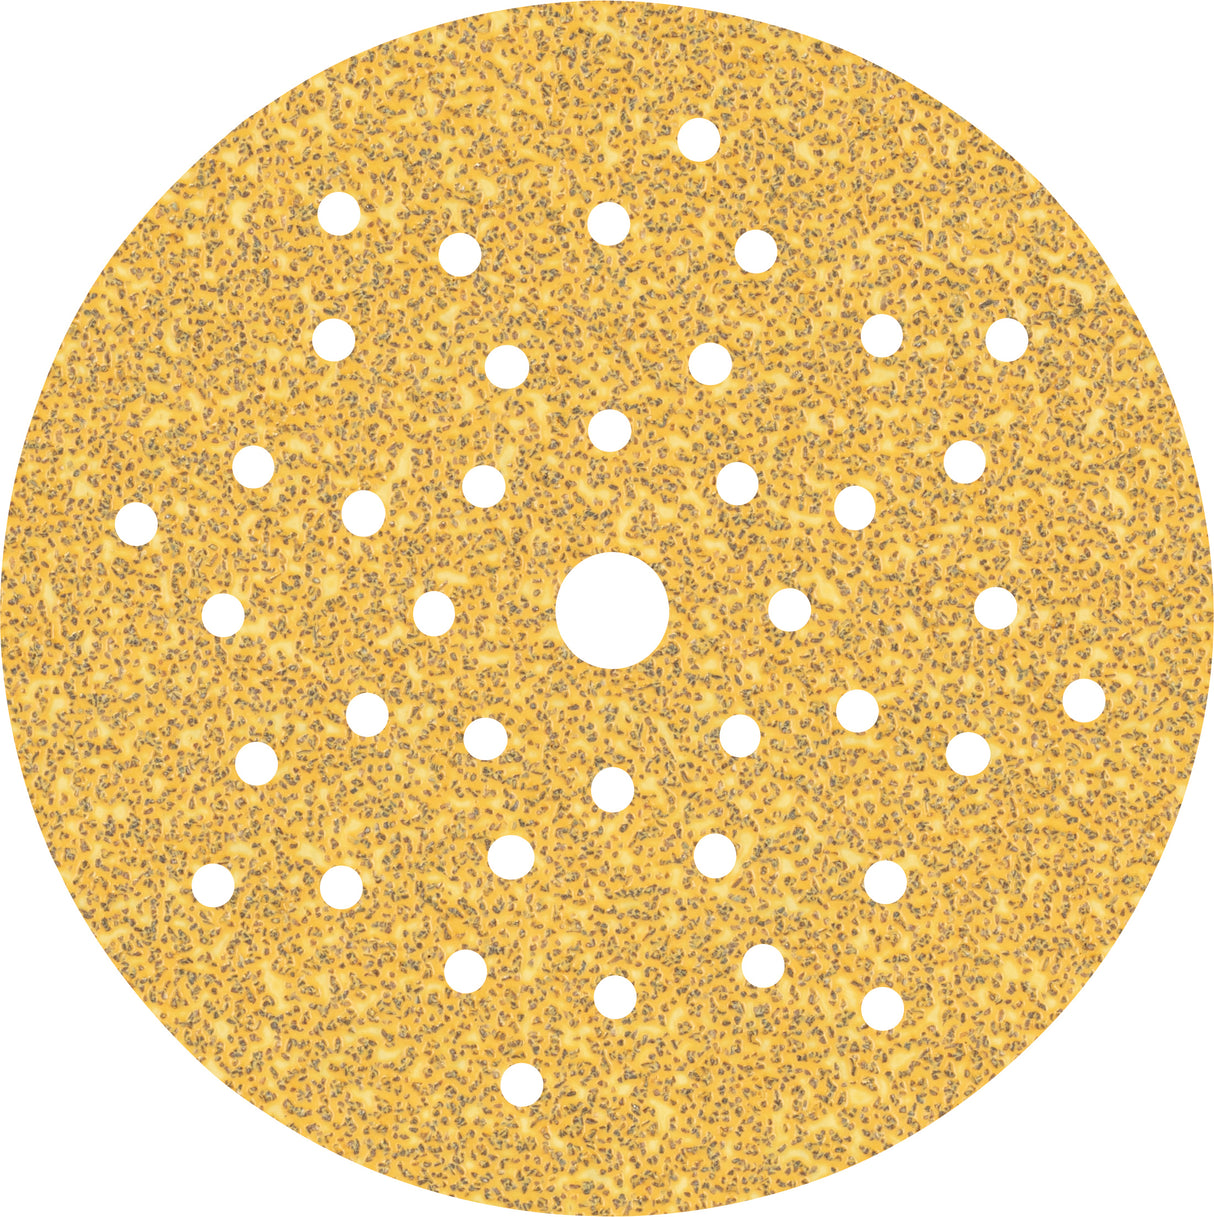 Bosch Professional Expert C470 Sandpaper - 125mm Random Orbital Sanders, Multihole, G 40